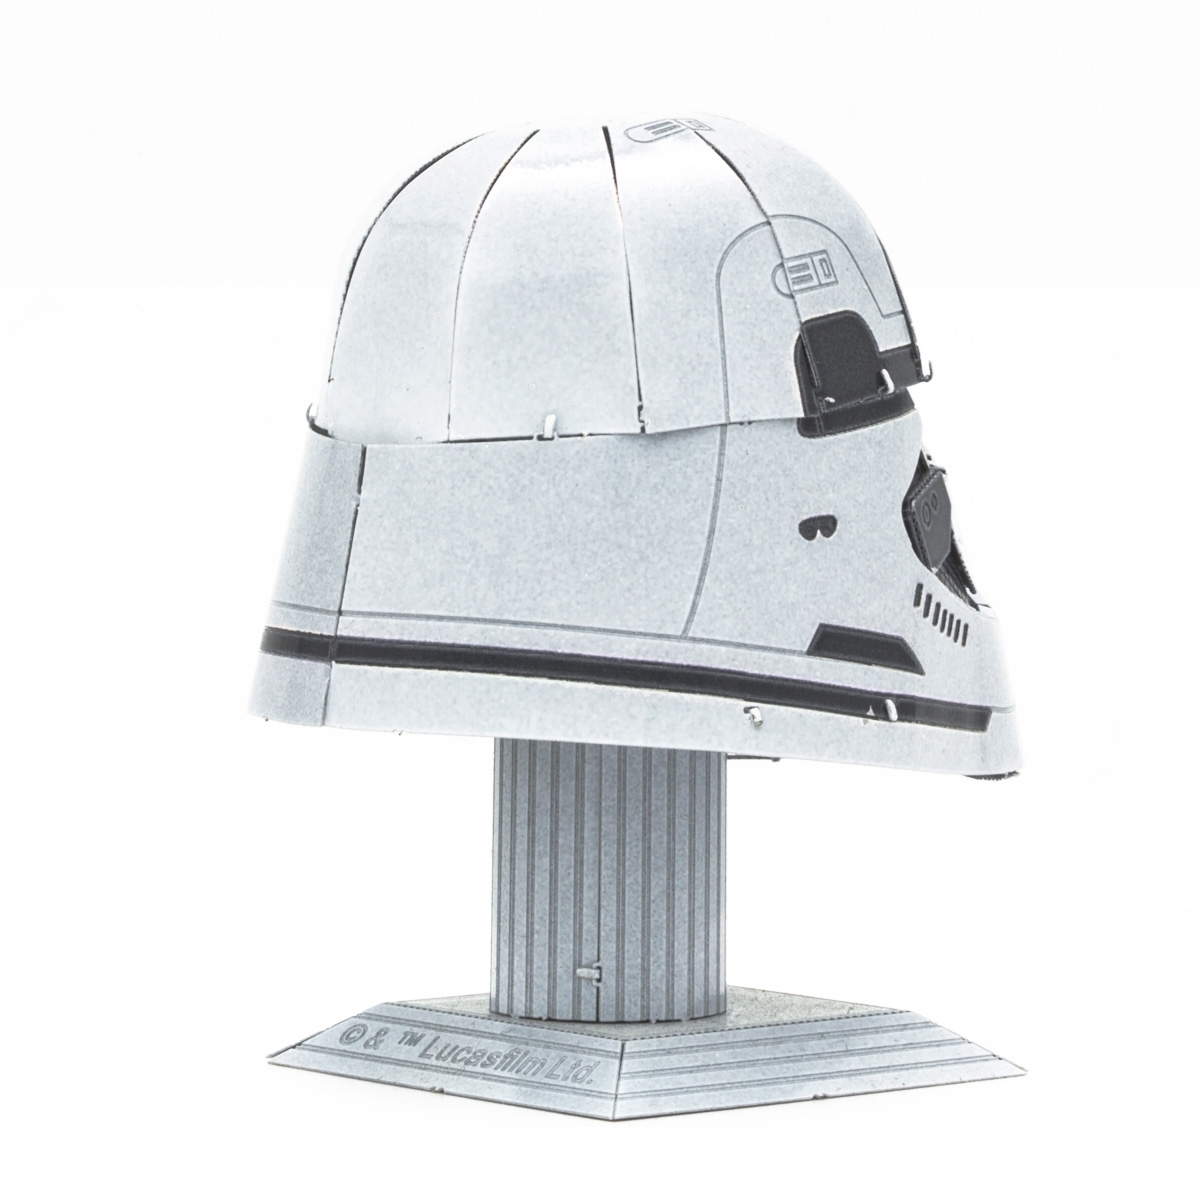 Fascinations Metal Earth Star Wars Stormtrooper Helmet 3d Model Kit MMS316 for sale online